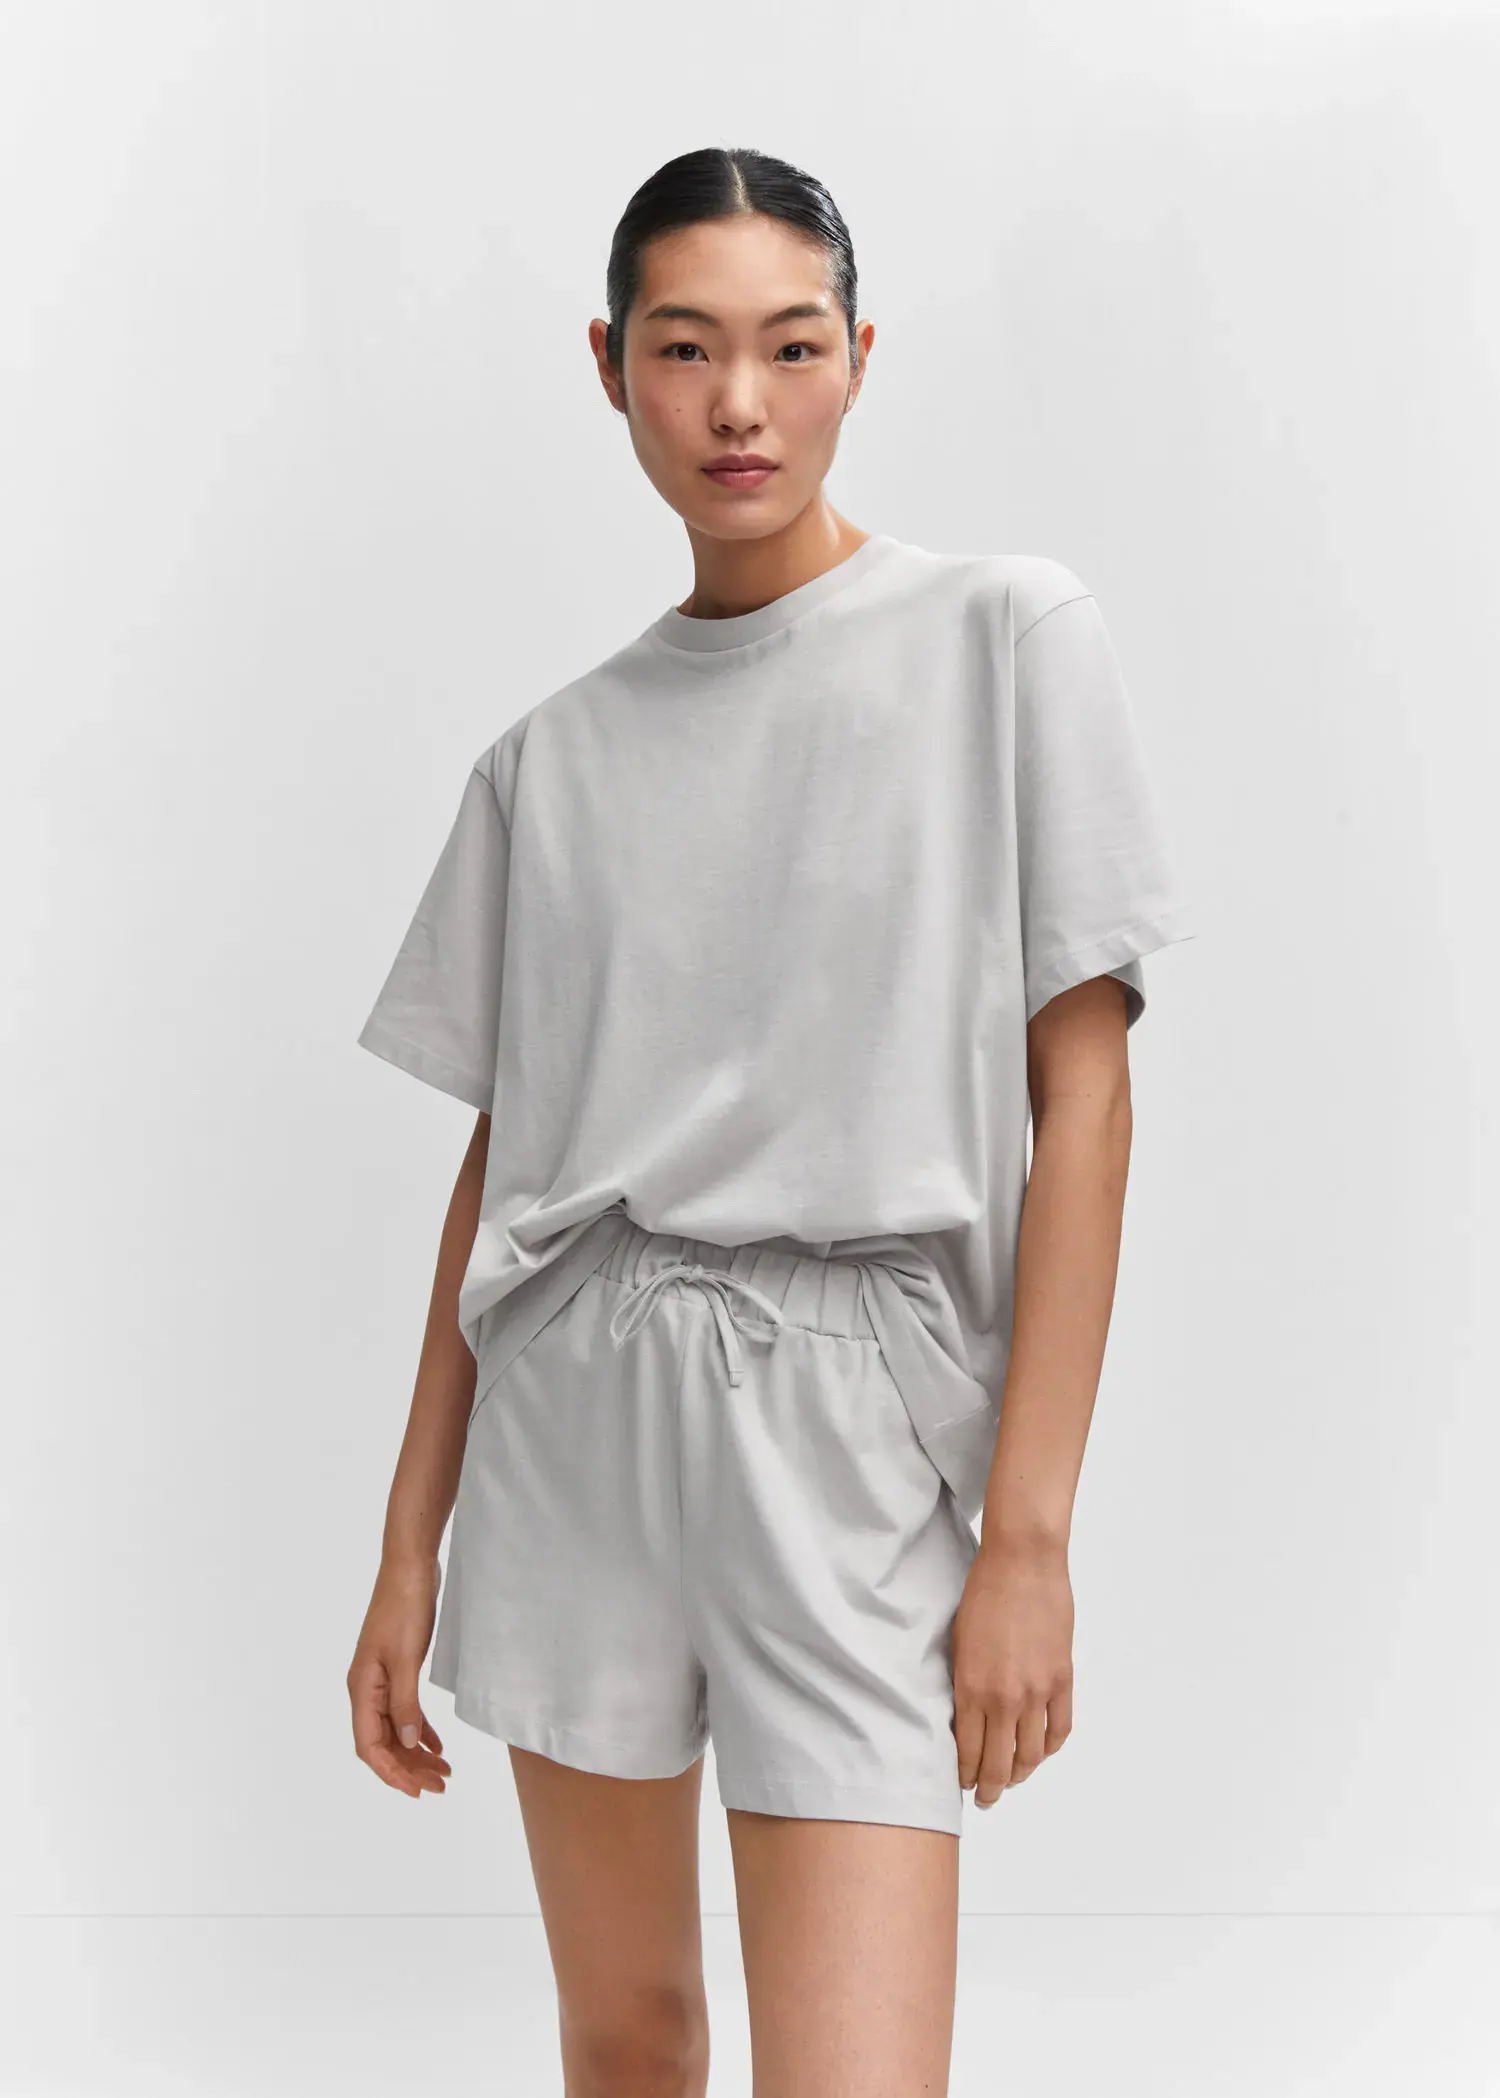 Mango Short cotton pyjamas. a person wearing a white shirt and shorts. 